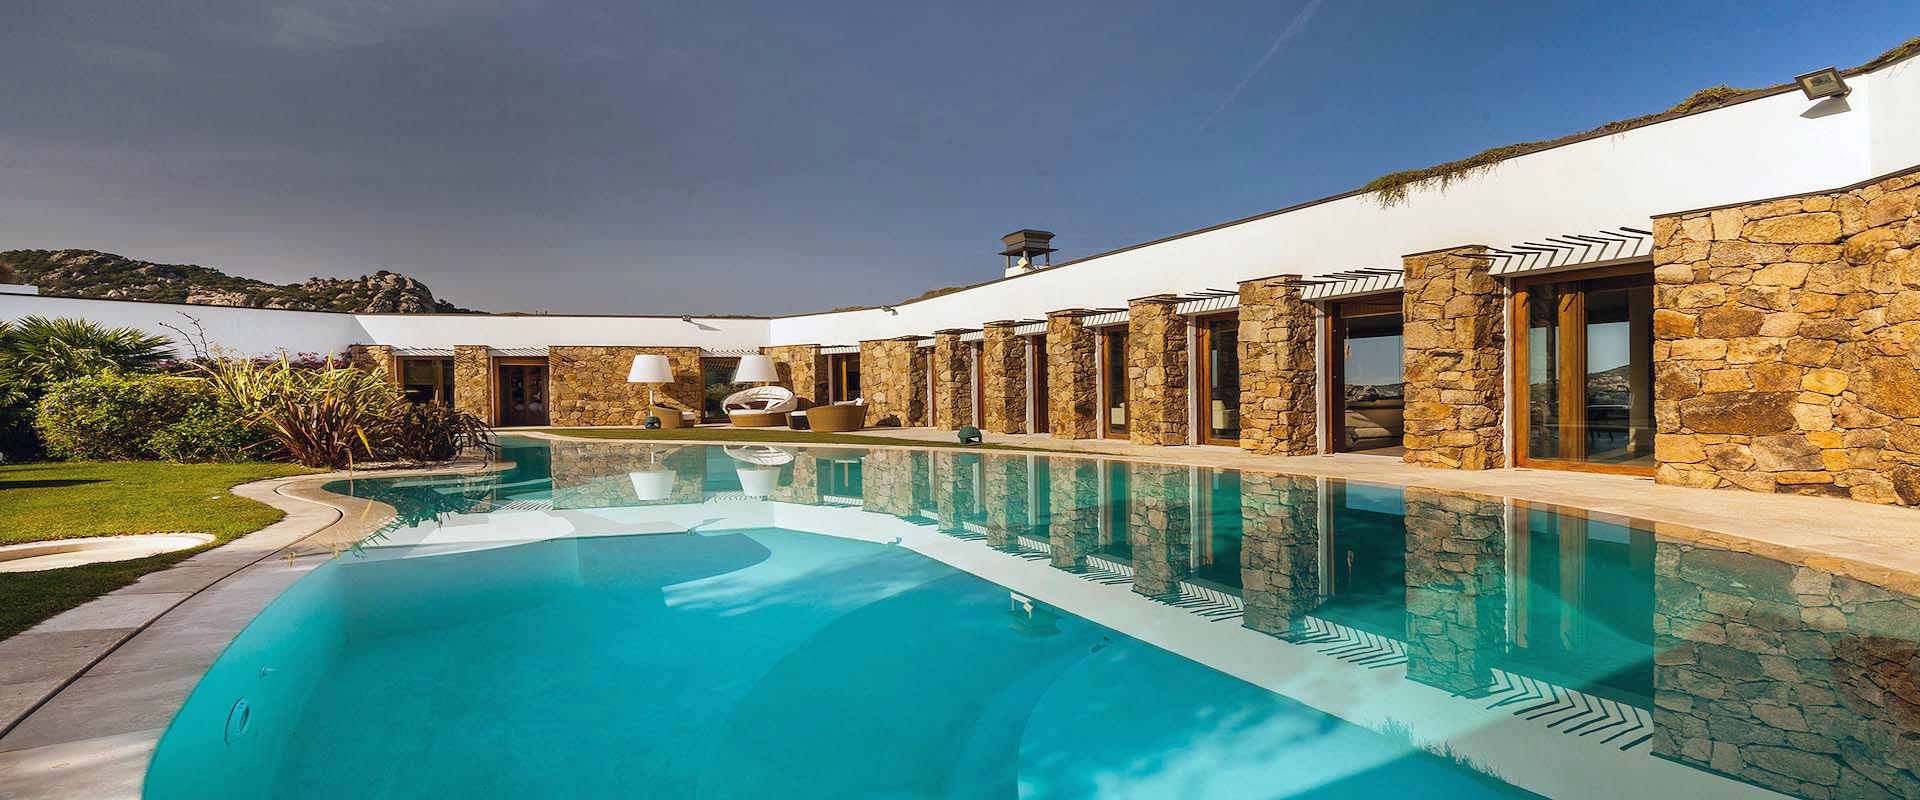 Villa Splendida infinity pool